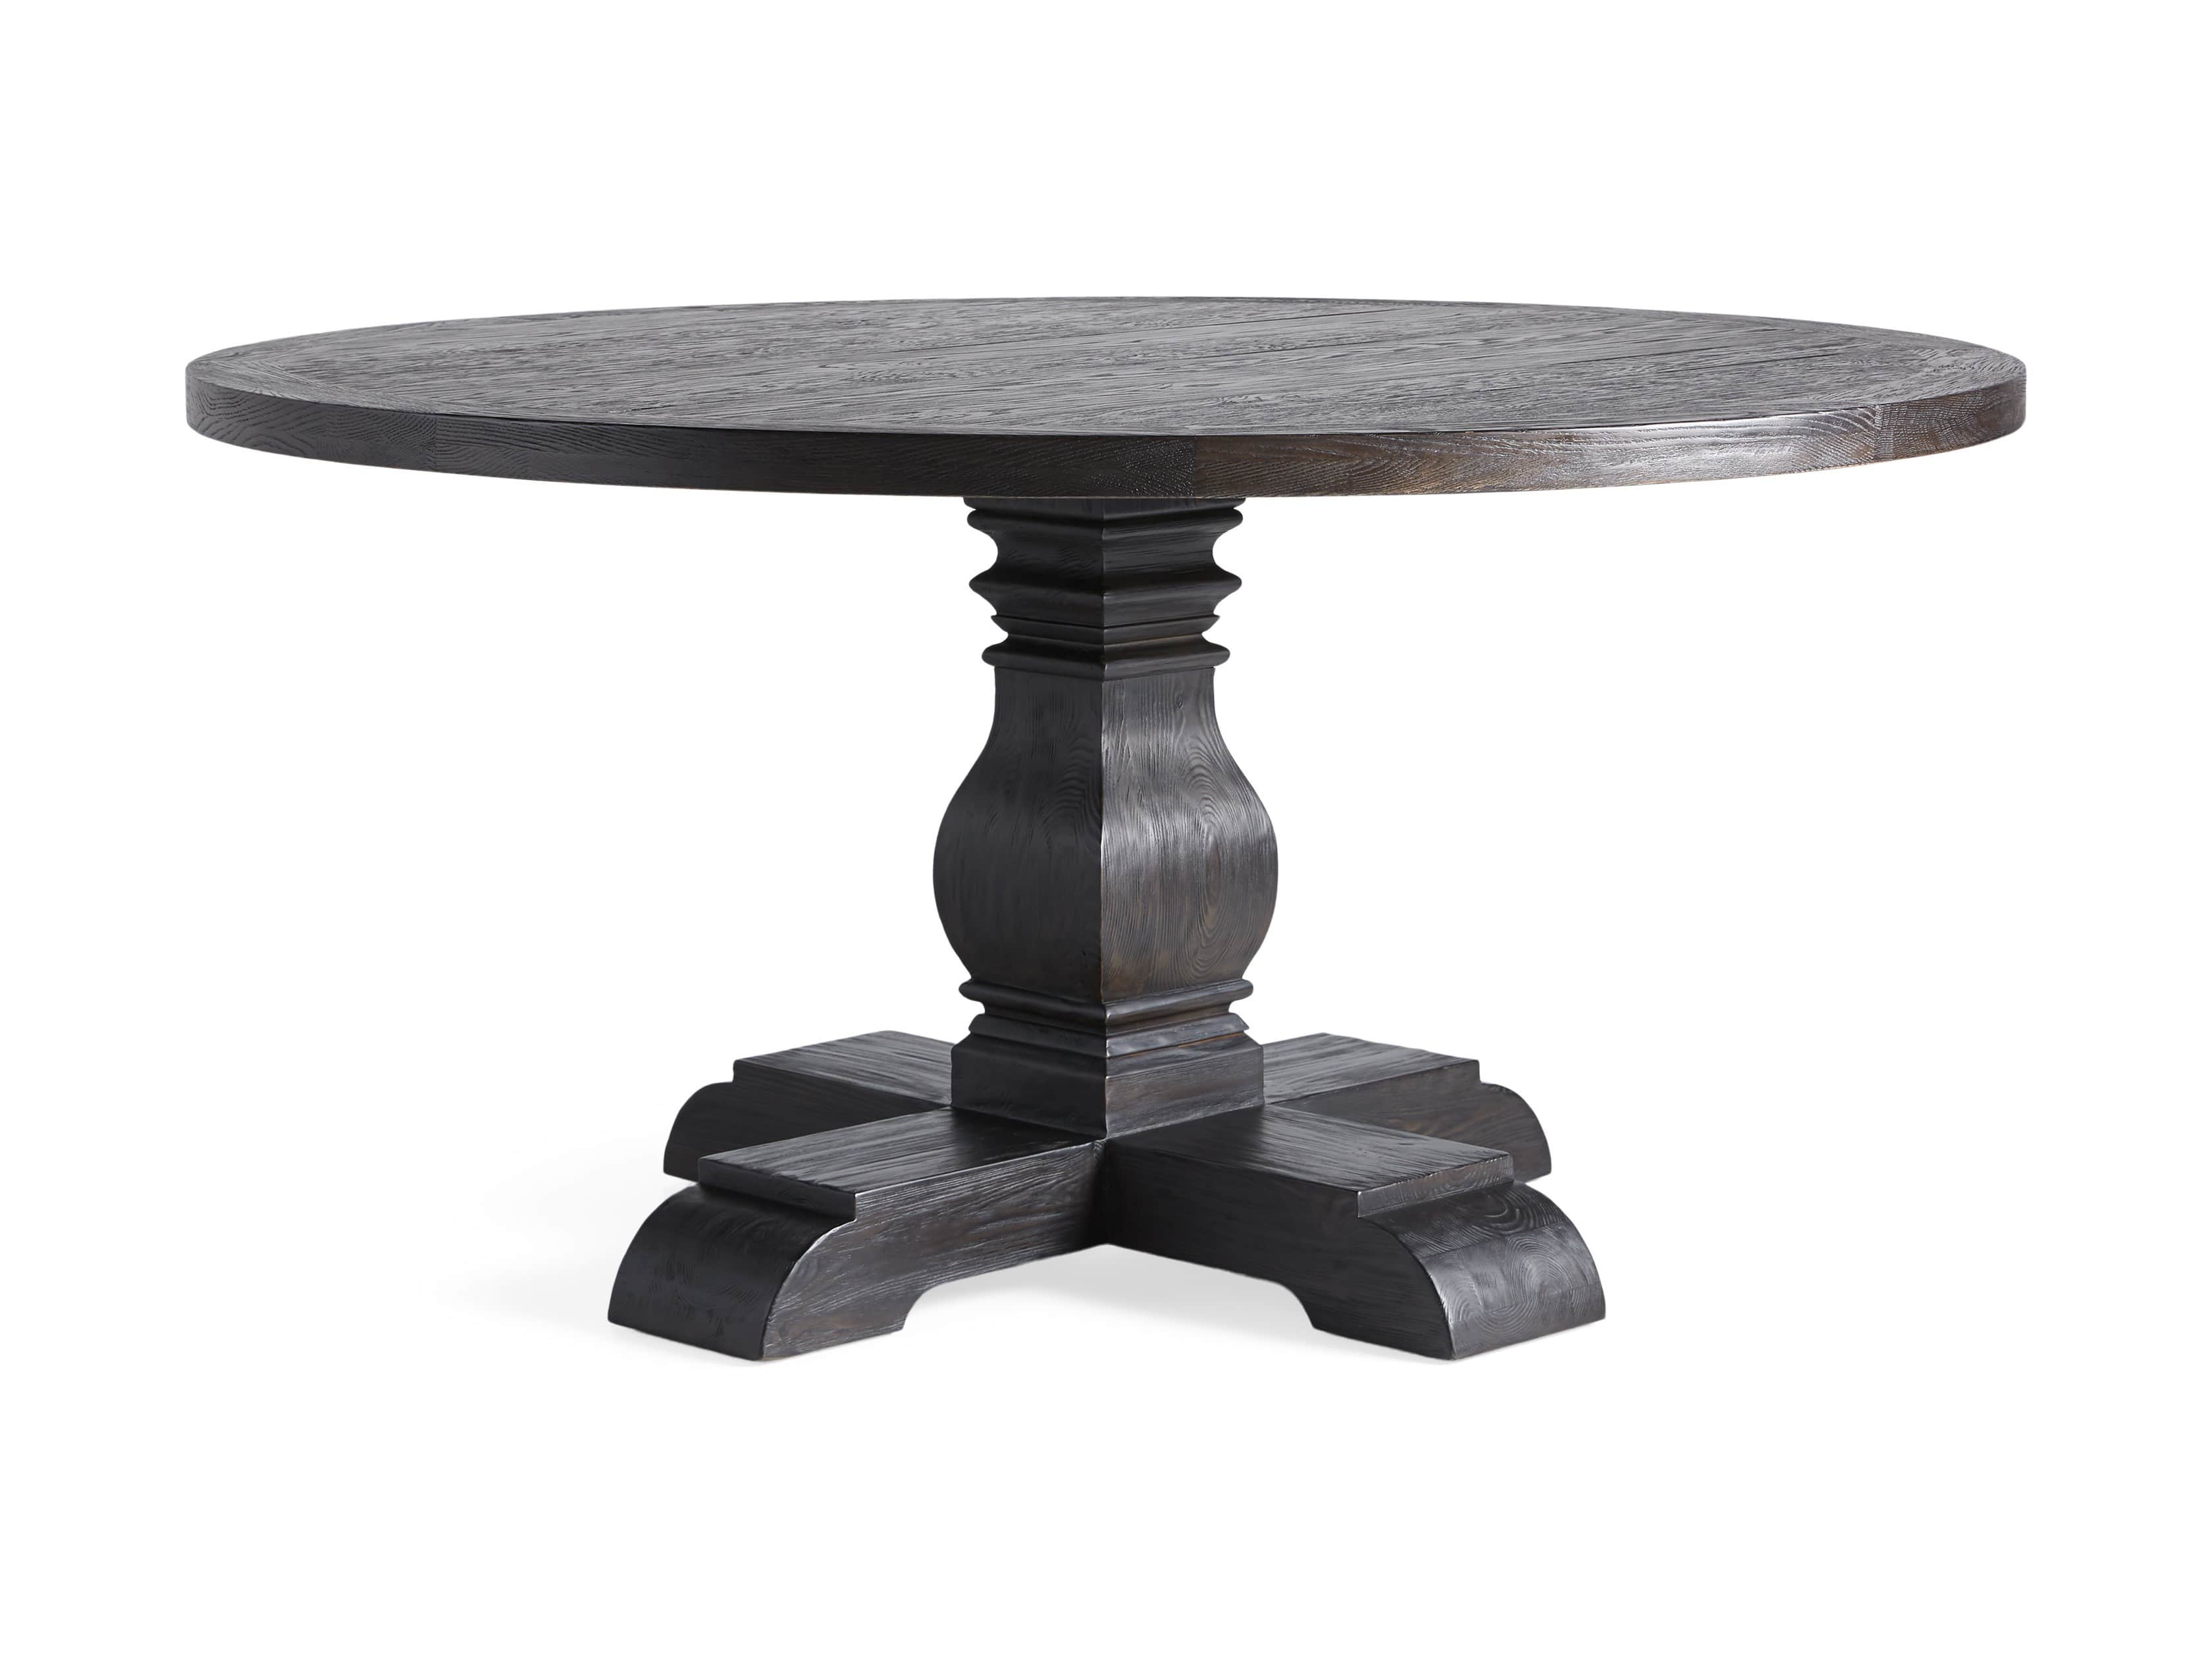 Kensington Round Dining Table Arhaus, Black Round Pedestal Table